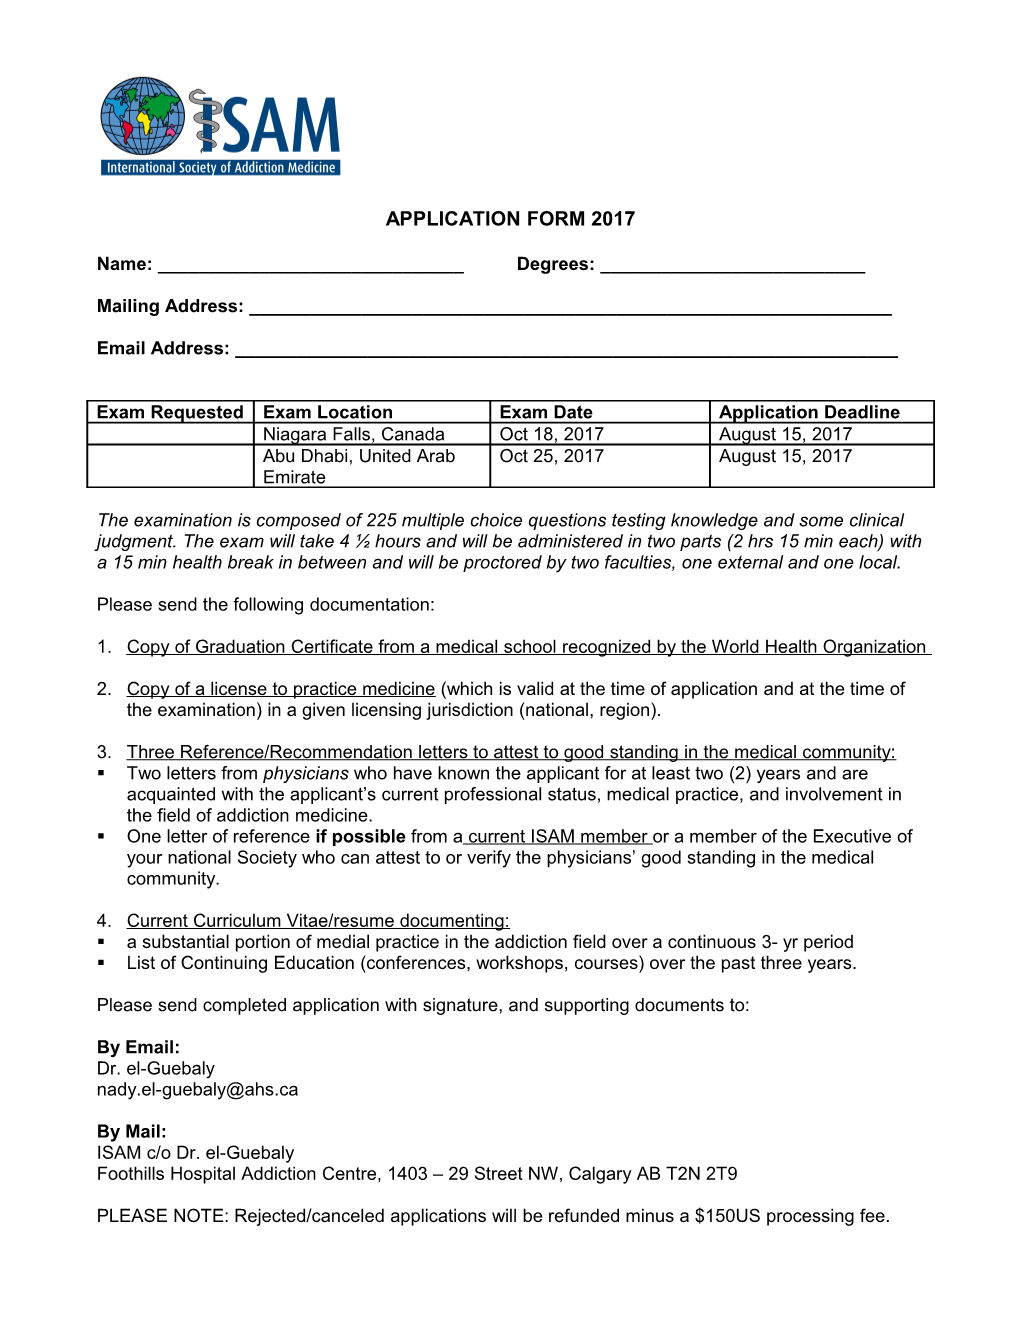 Application Form 2017